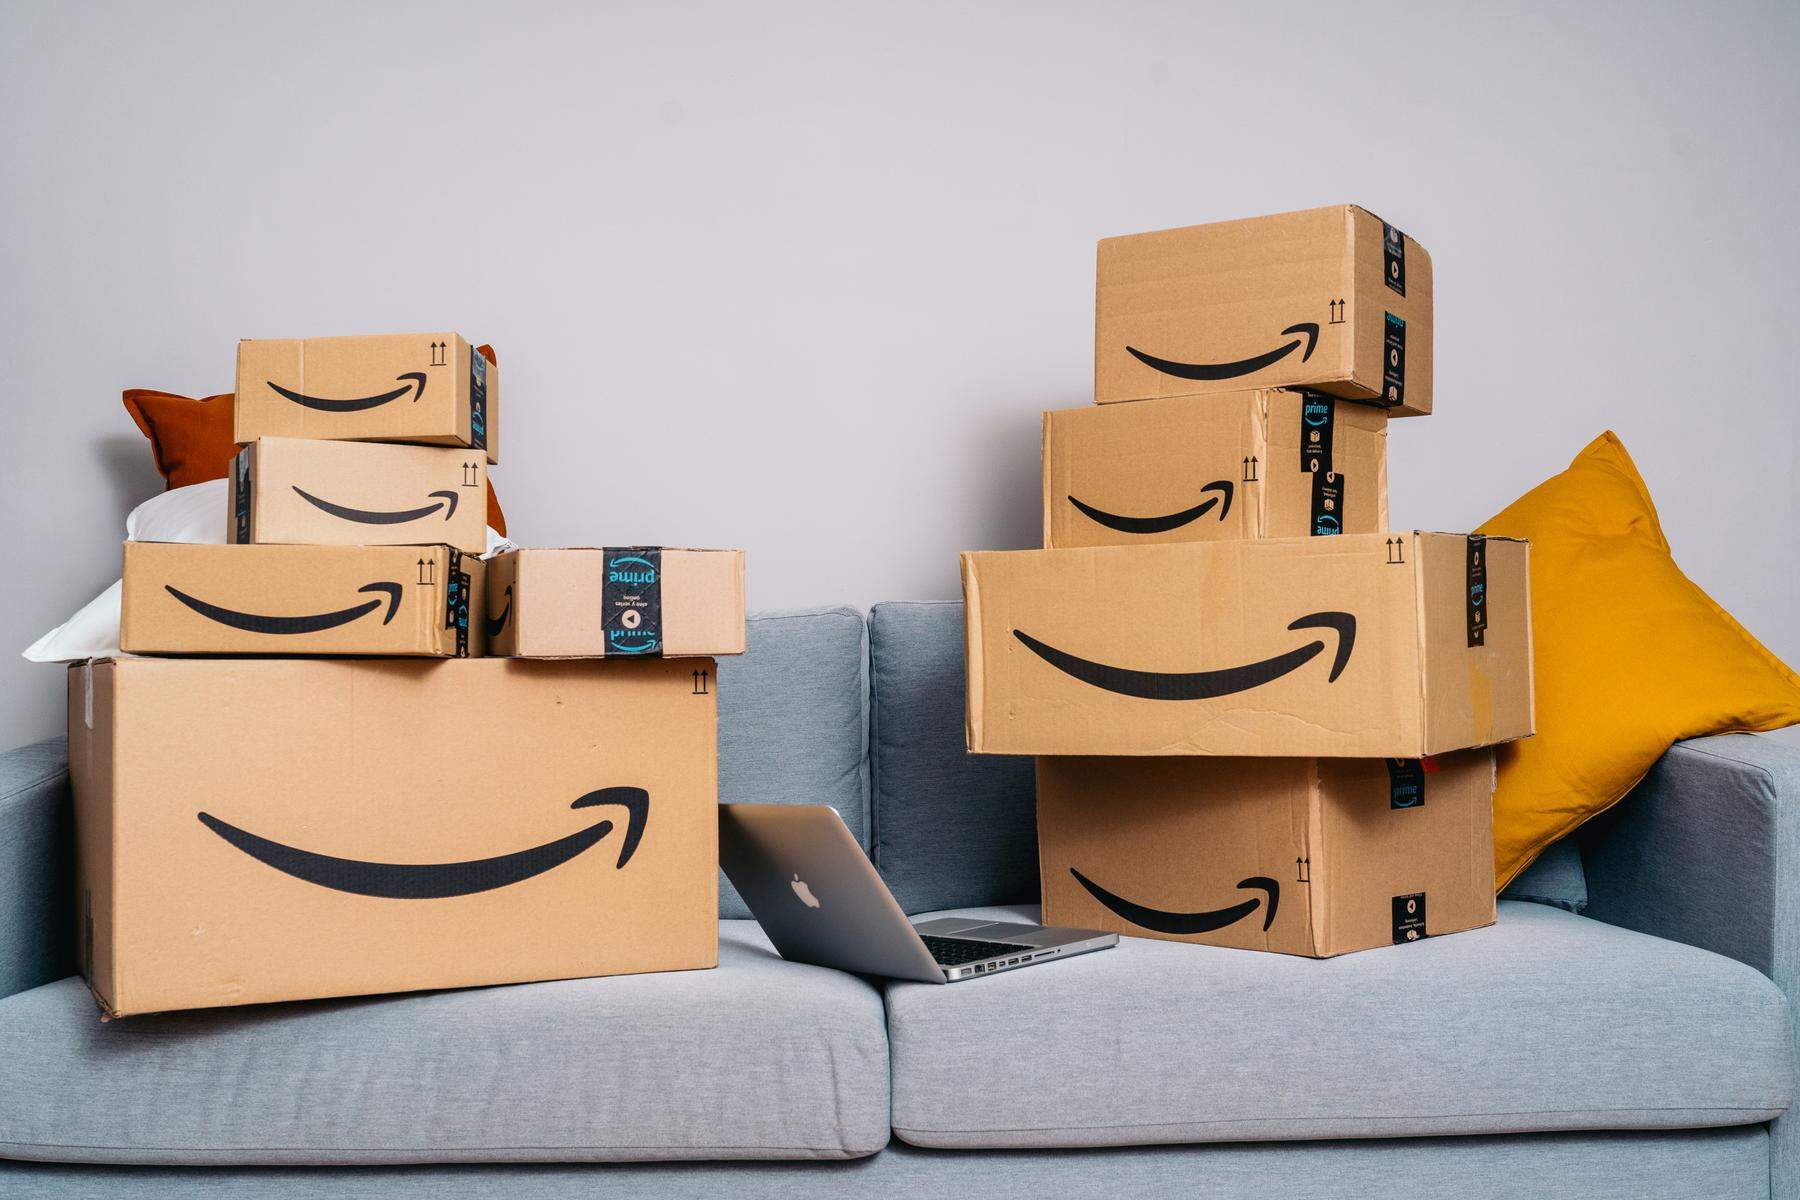 Schneller retour: Amazon halbiert Rückgabefrist bei vielen Produkten